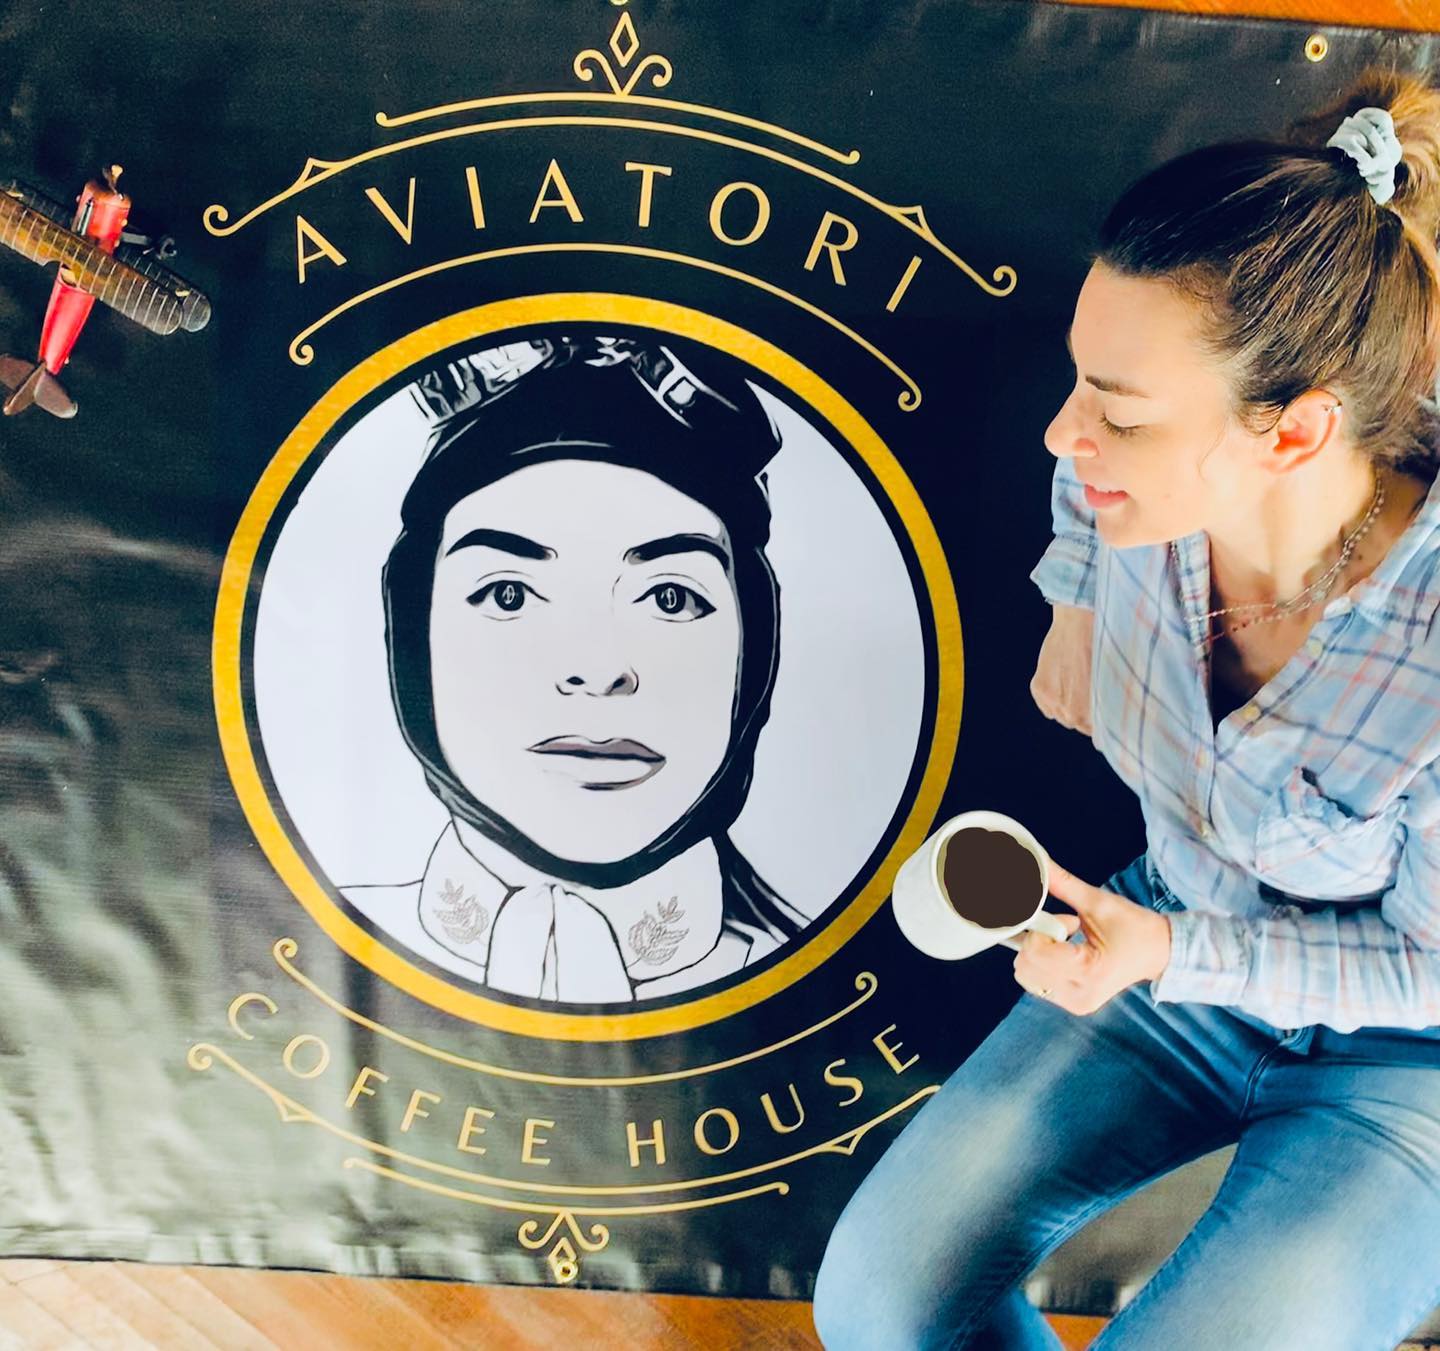 Aviatori Coffeehouse